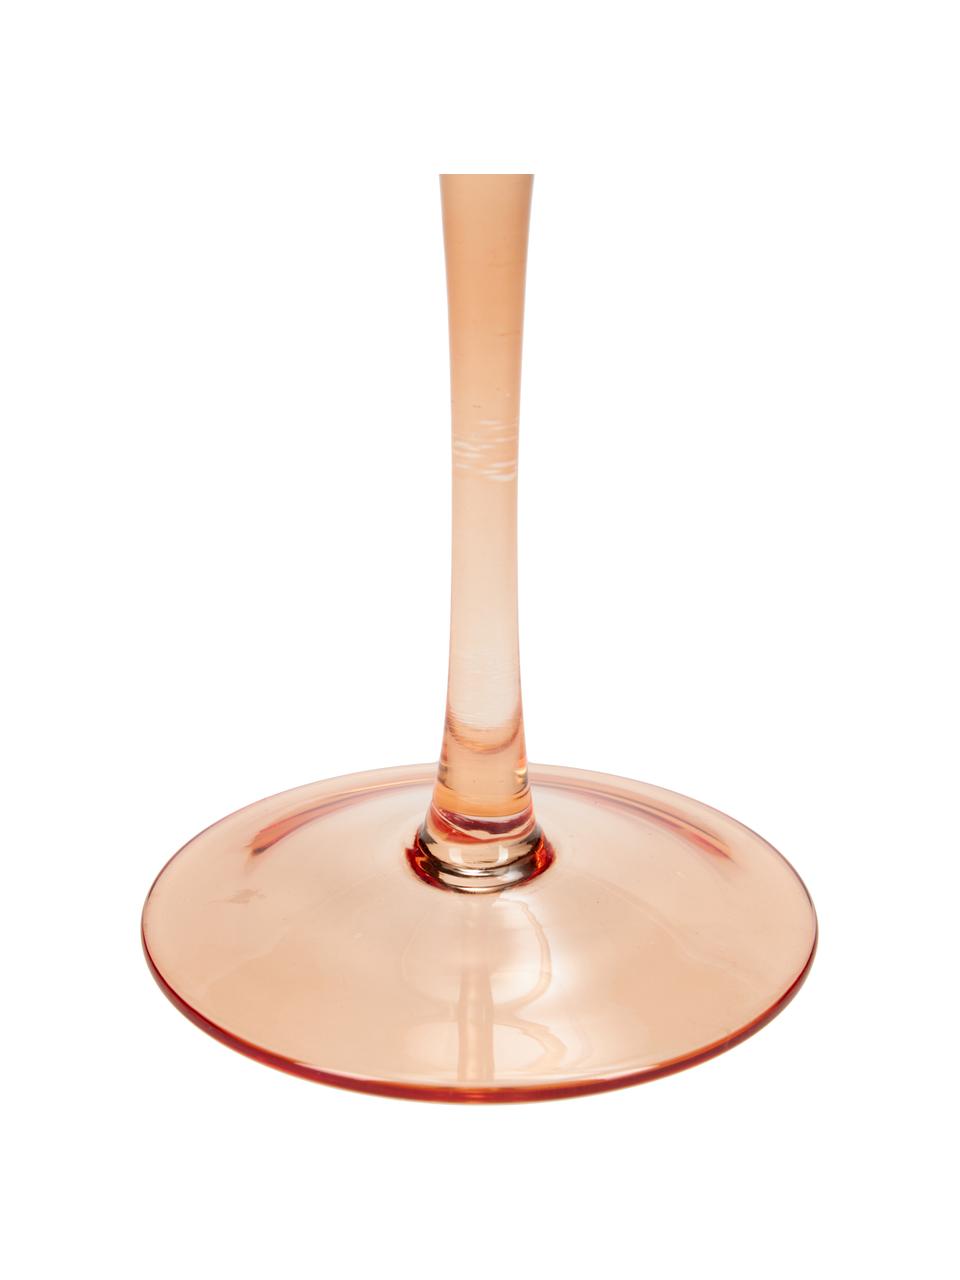 Copas pompadour de champán Goldie, 6 uds., Vidrio, Rosa, dorado, Ø 12 x Al 17 cm, 250 ml